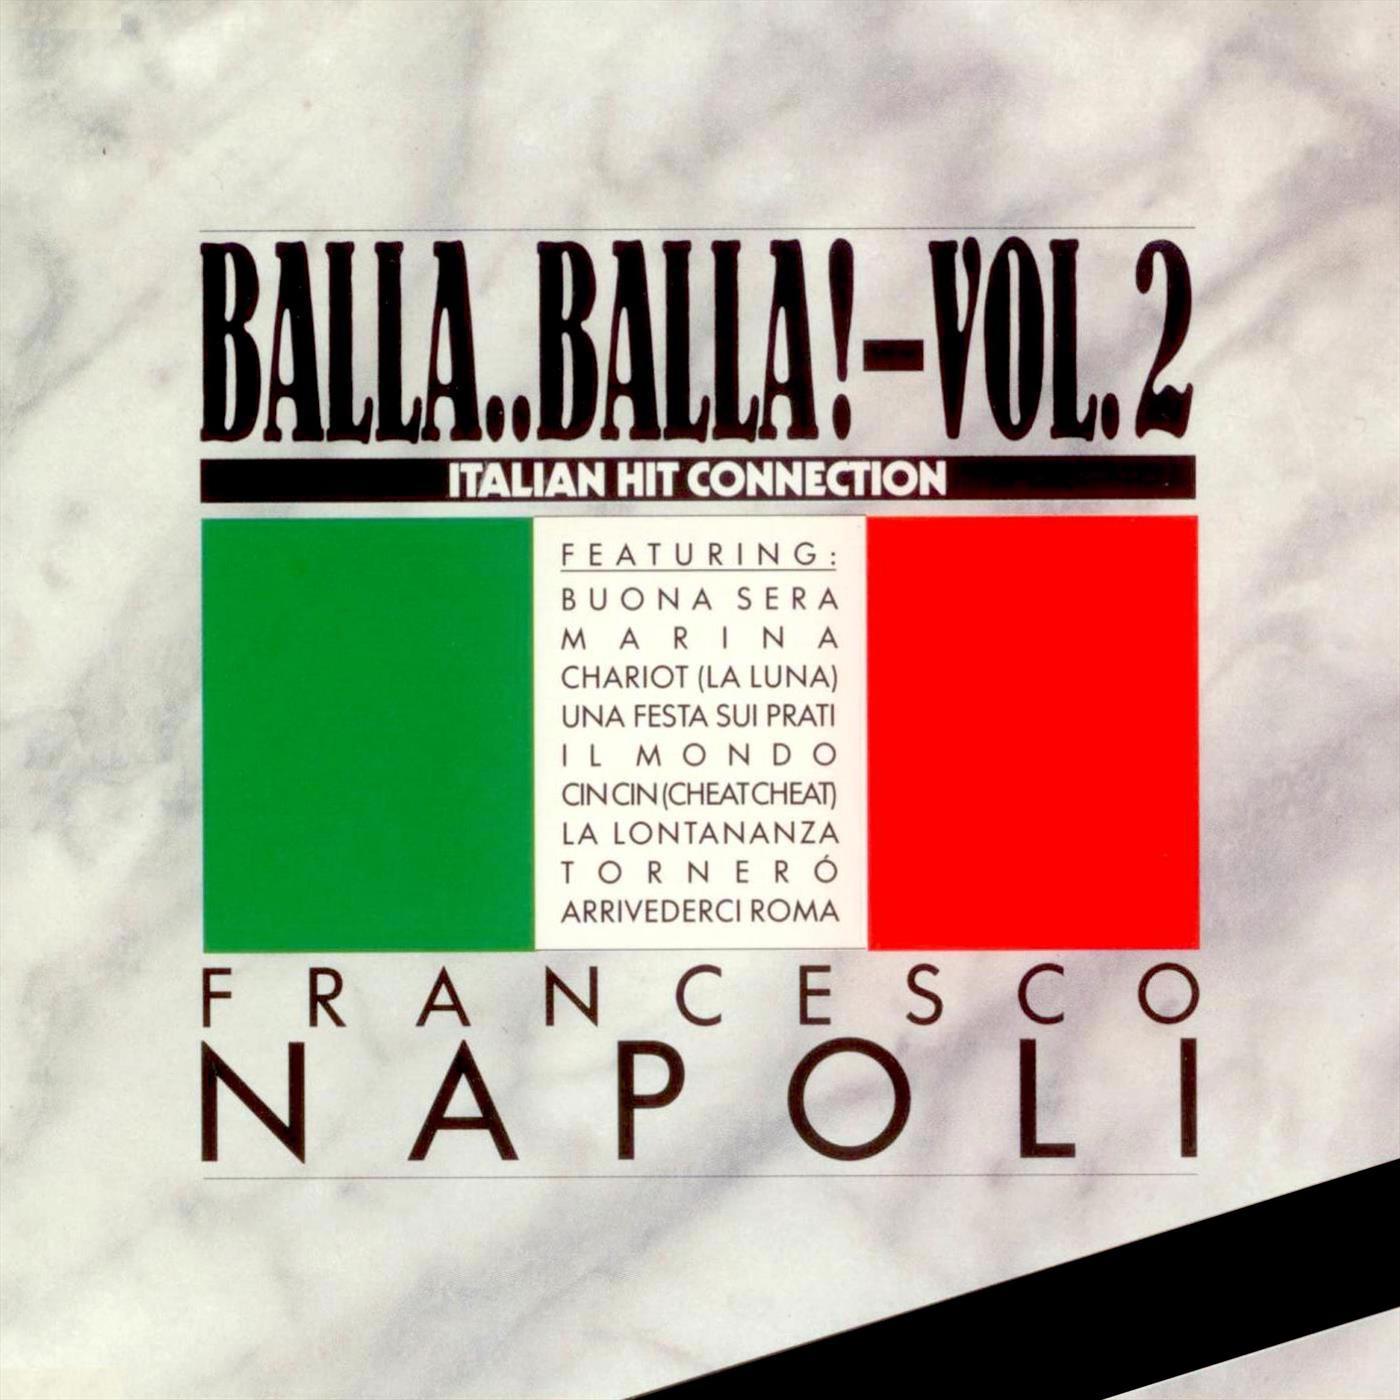 Balla..Balla! Vol.2 Italian Hit Connection (Single Version)